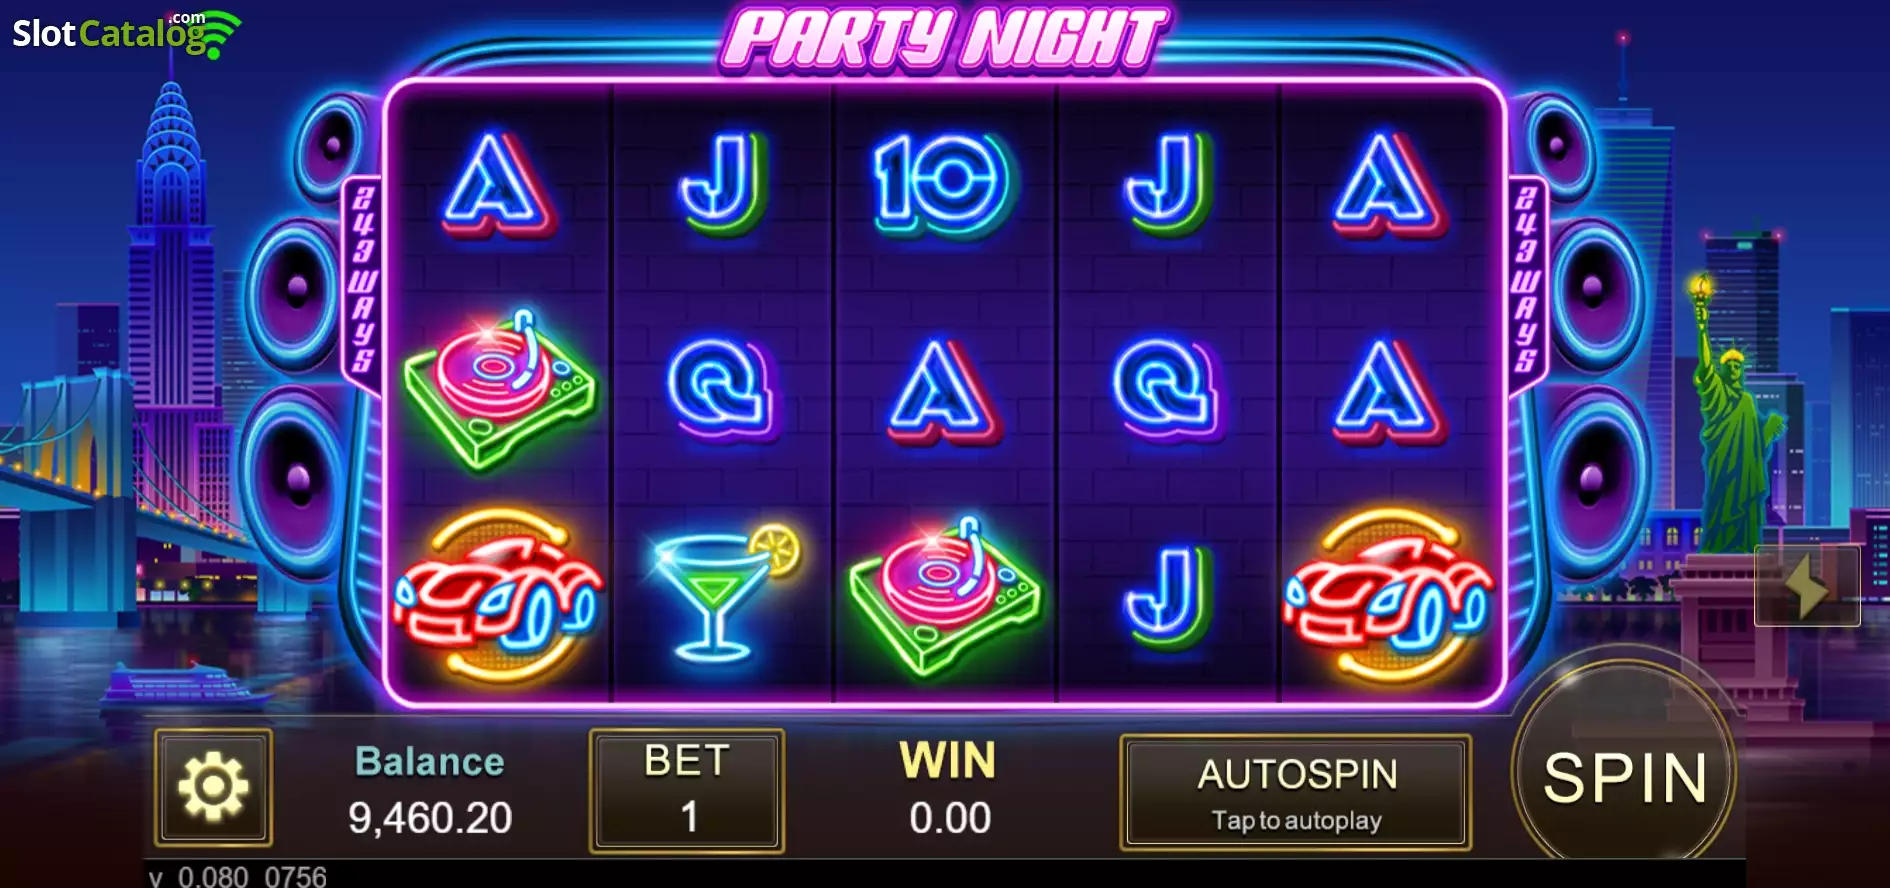 Party Night (Jili Games) Slot - Free Demo & Game Review